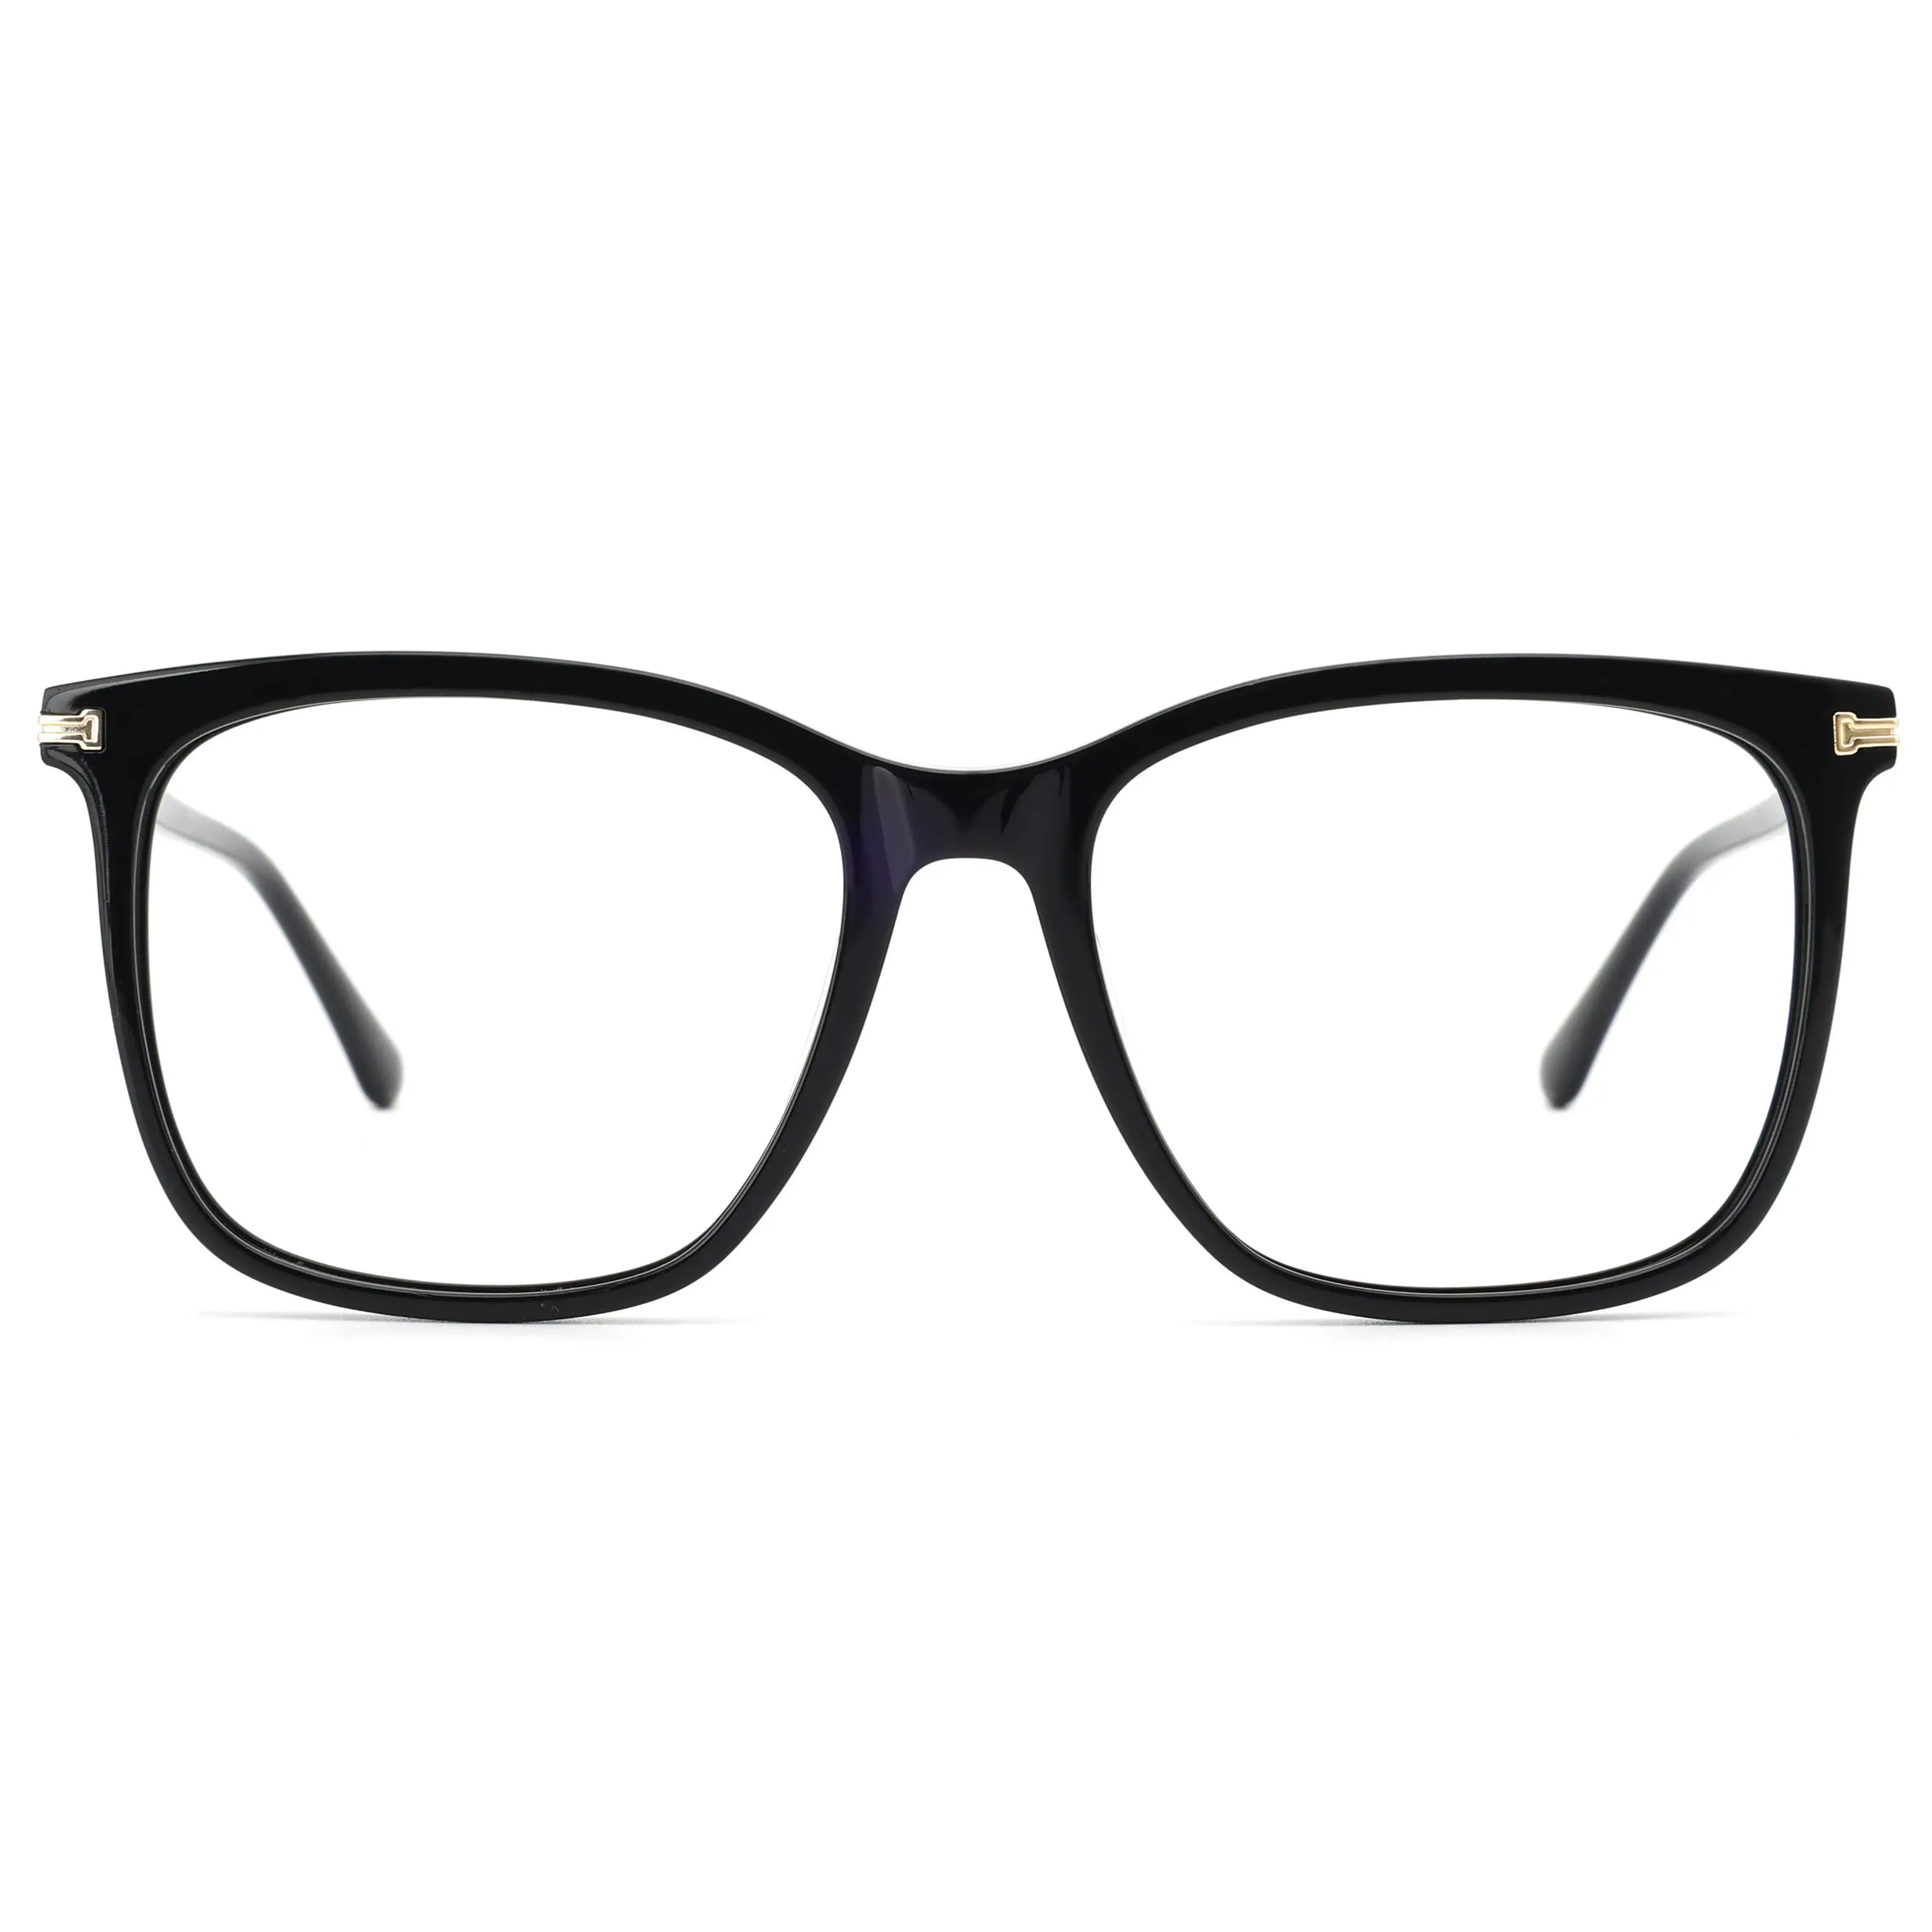 Oem Combination Acetate Fashion New Acetate Model Prescription Eyeglasses Round Unisex Optical Frame